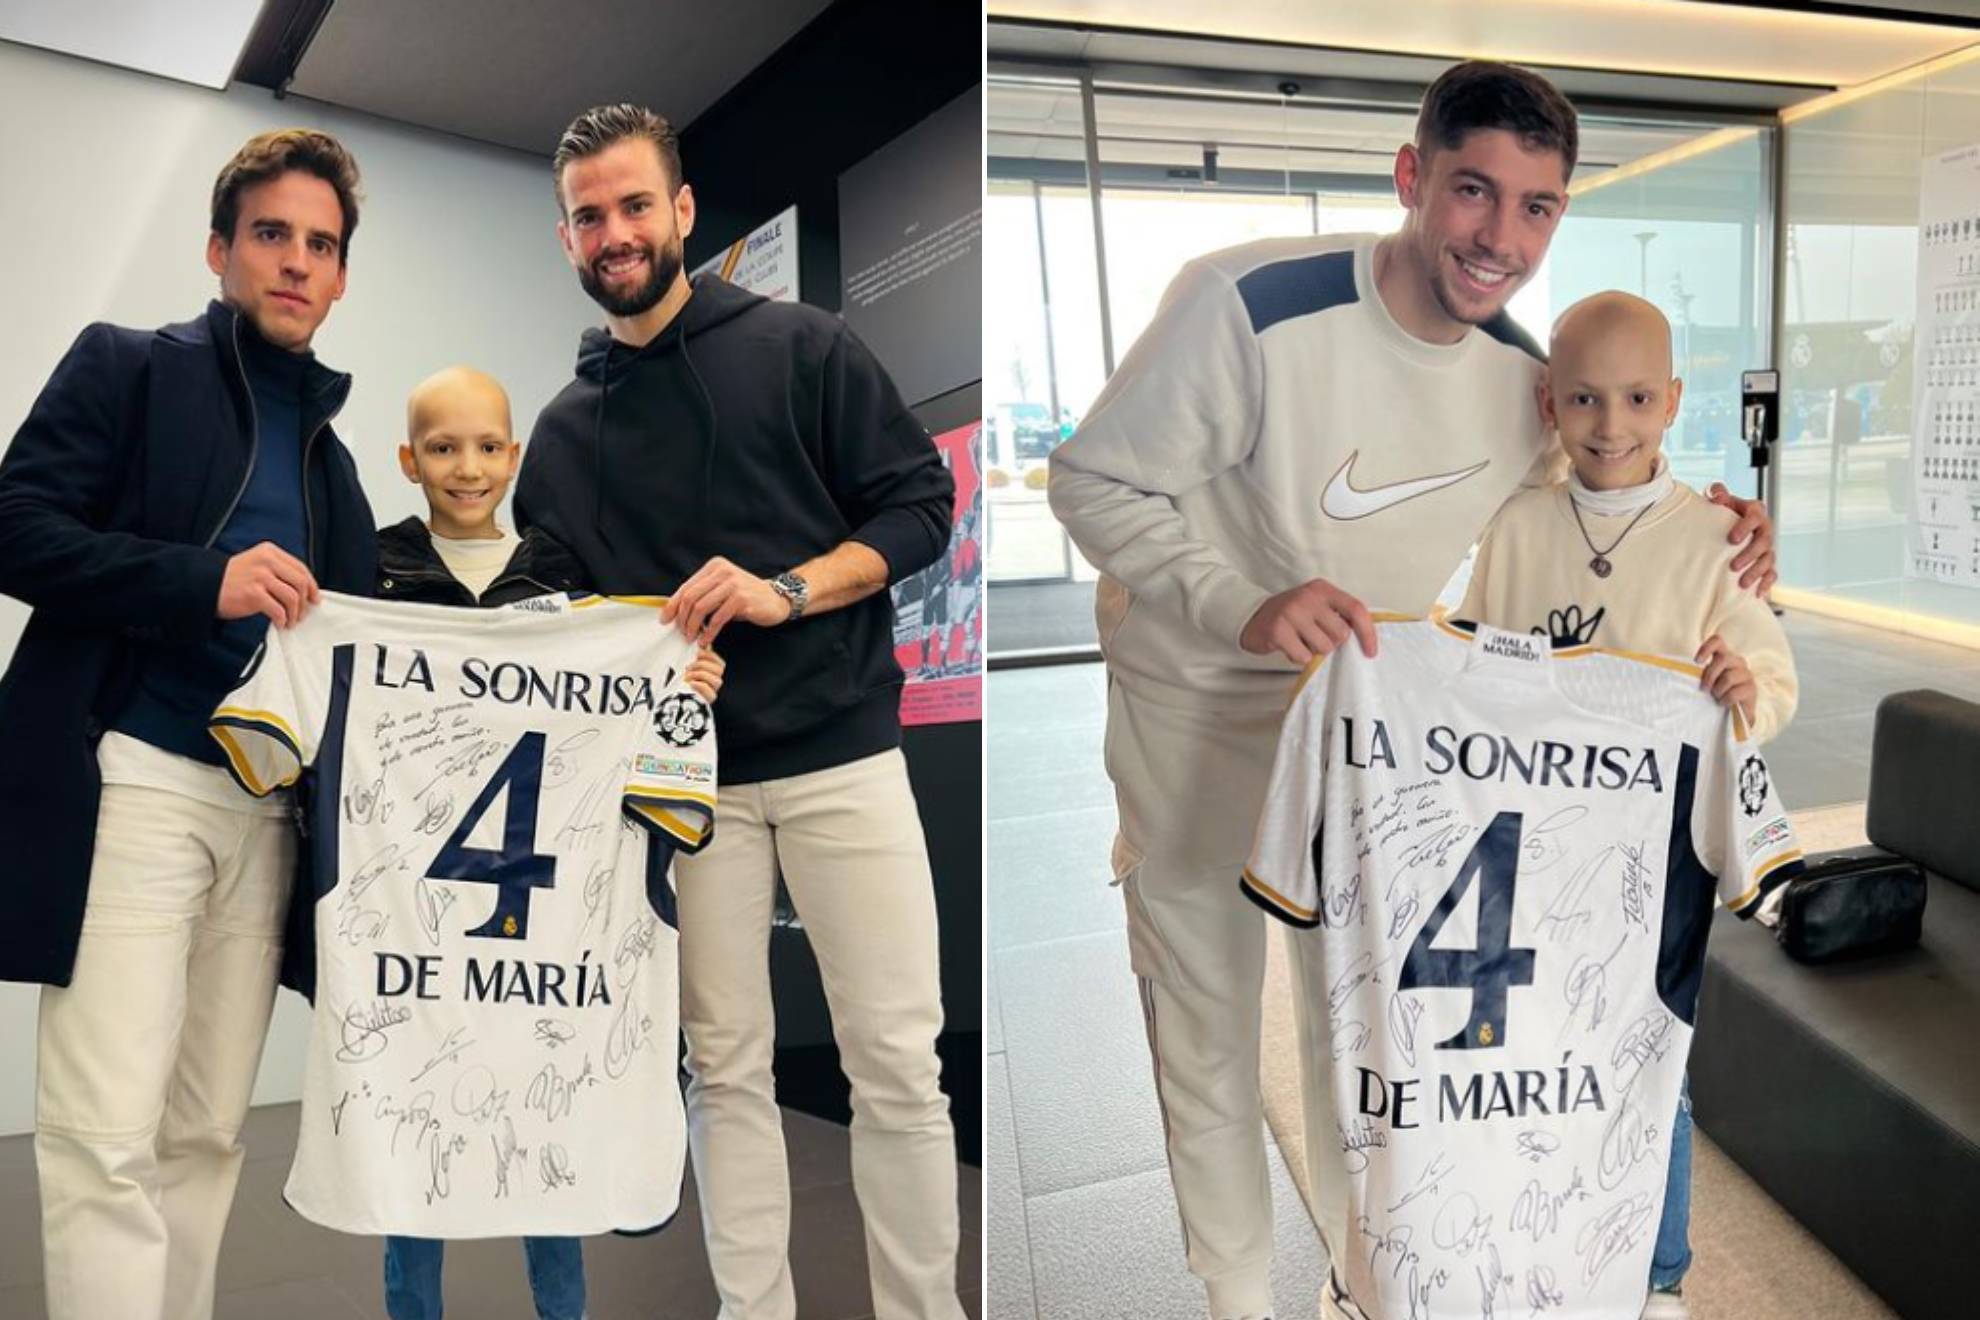 La Sonrisa de Mar�a conquista a los jugadores del Real Madrid: Eres una aut�ntica guerrera